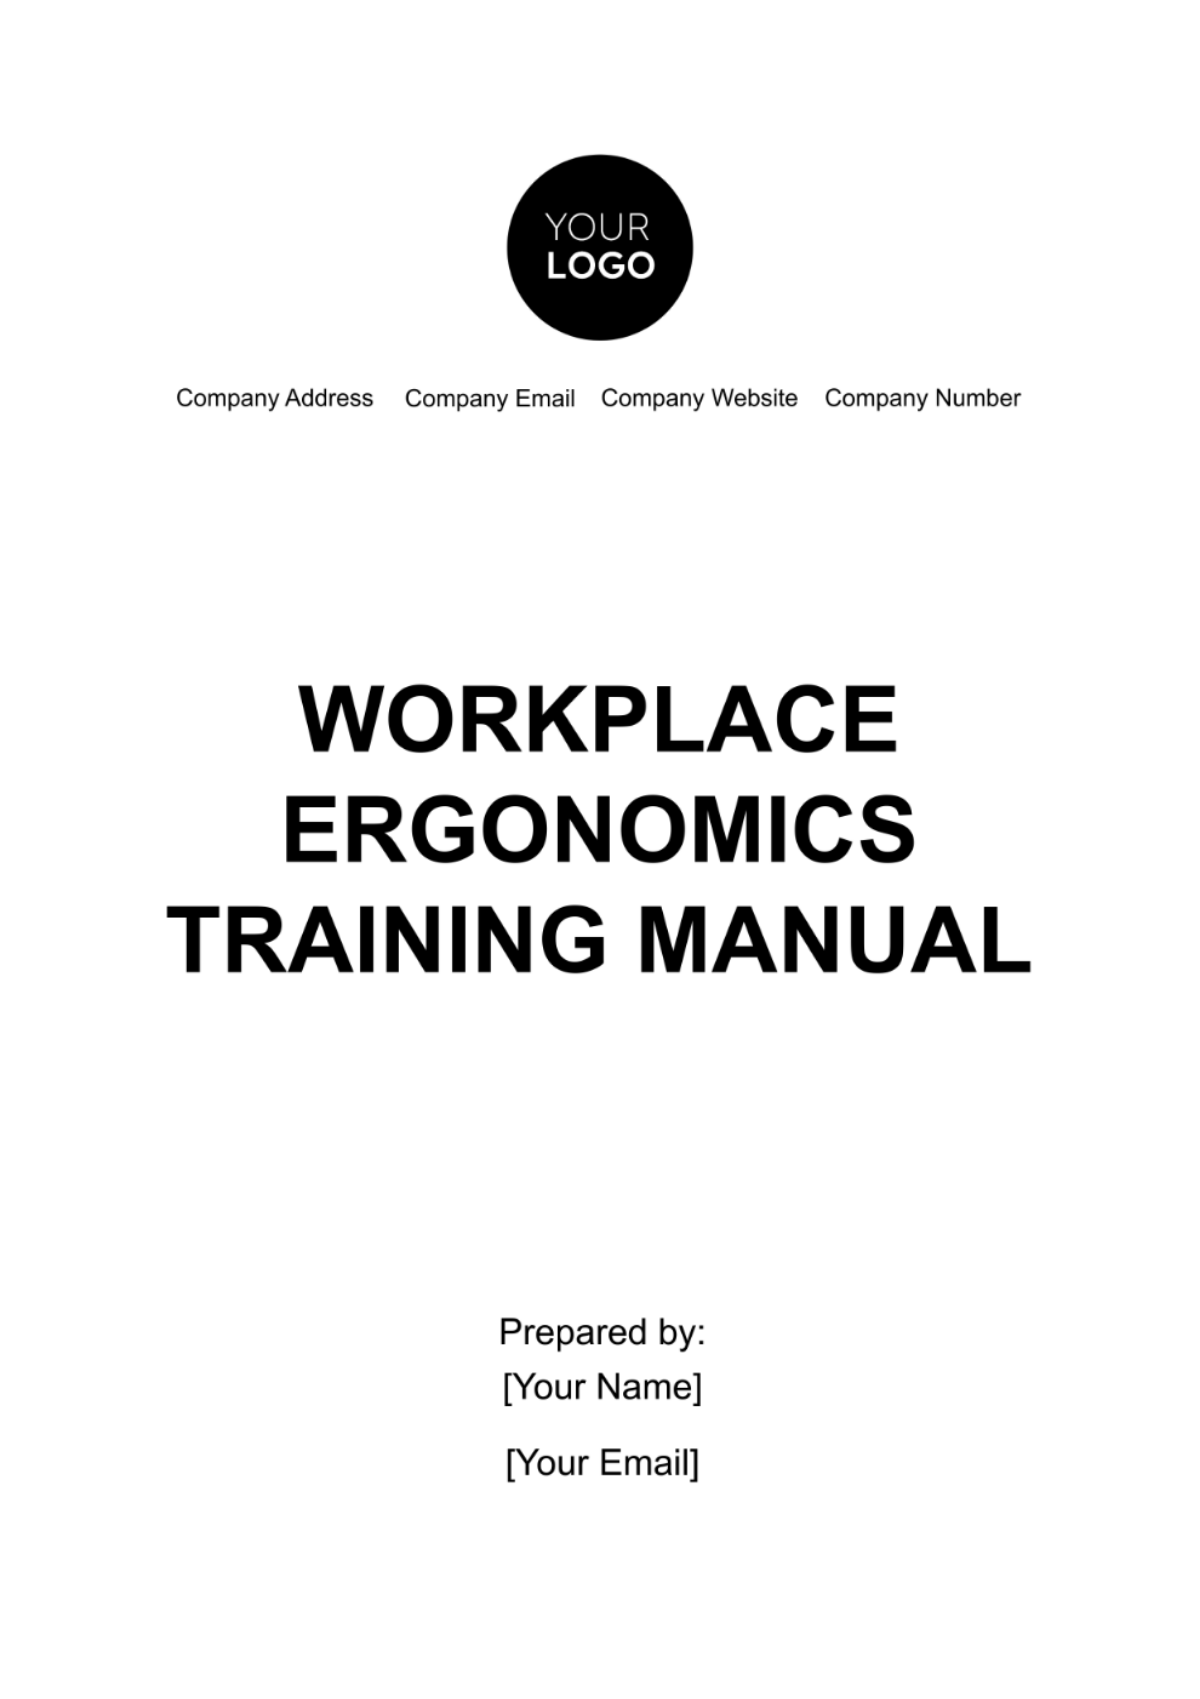 Workplace Ergonomics Training Manual Template